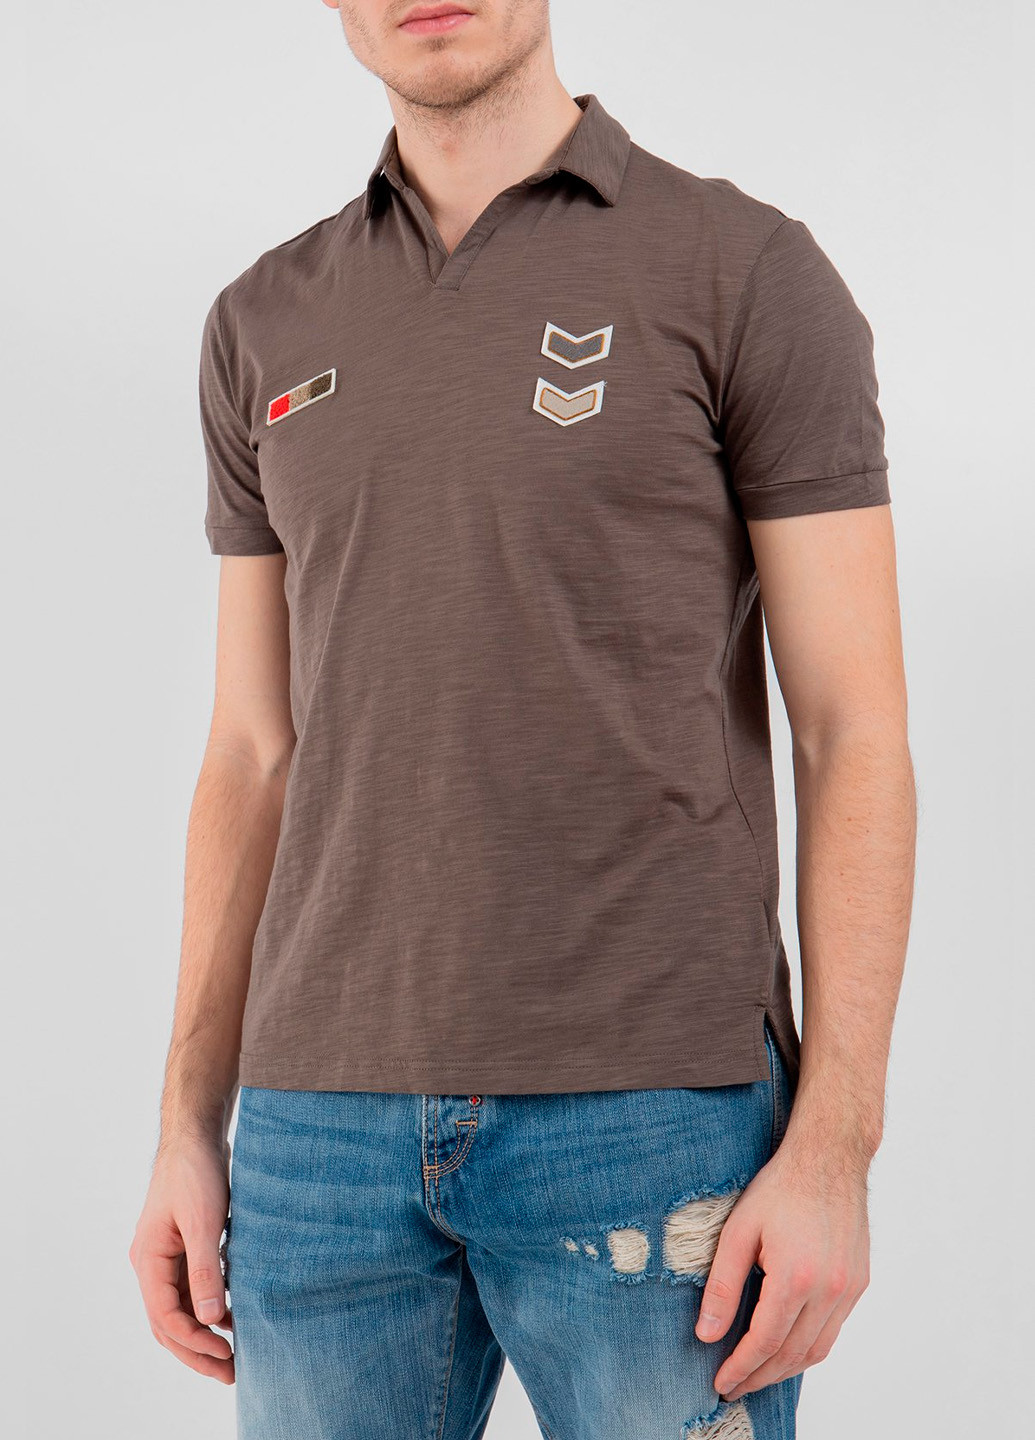 Коричневая футболка-поло для мужчин Antony Morato